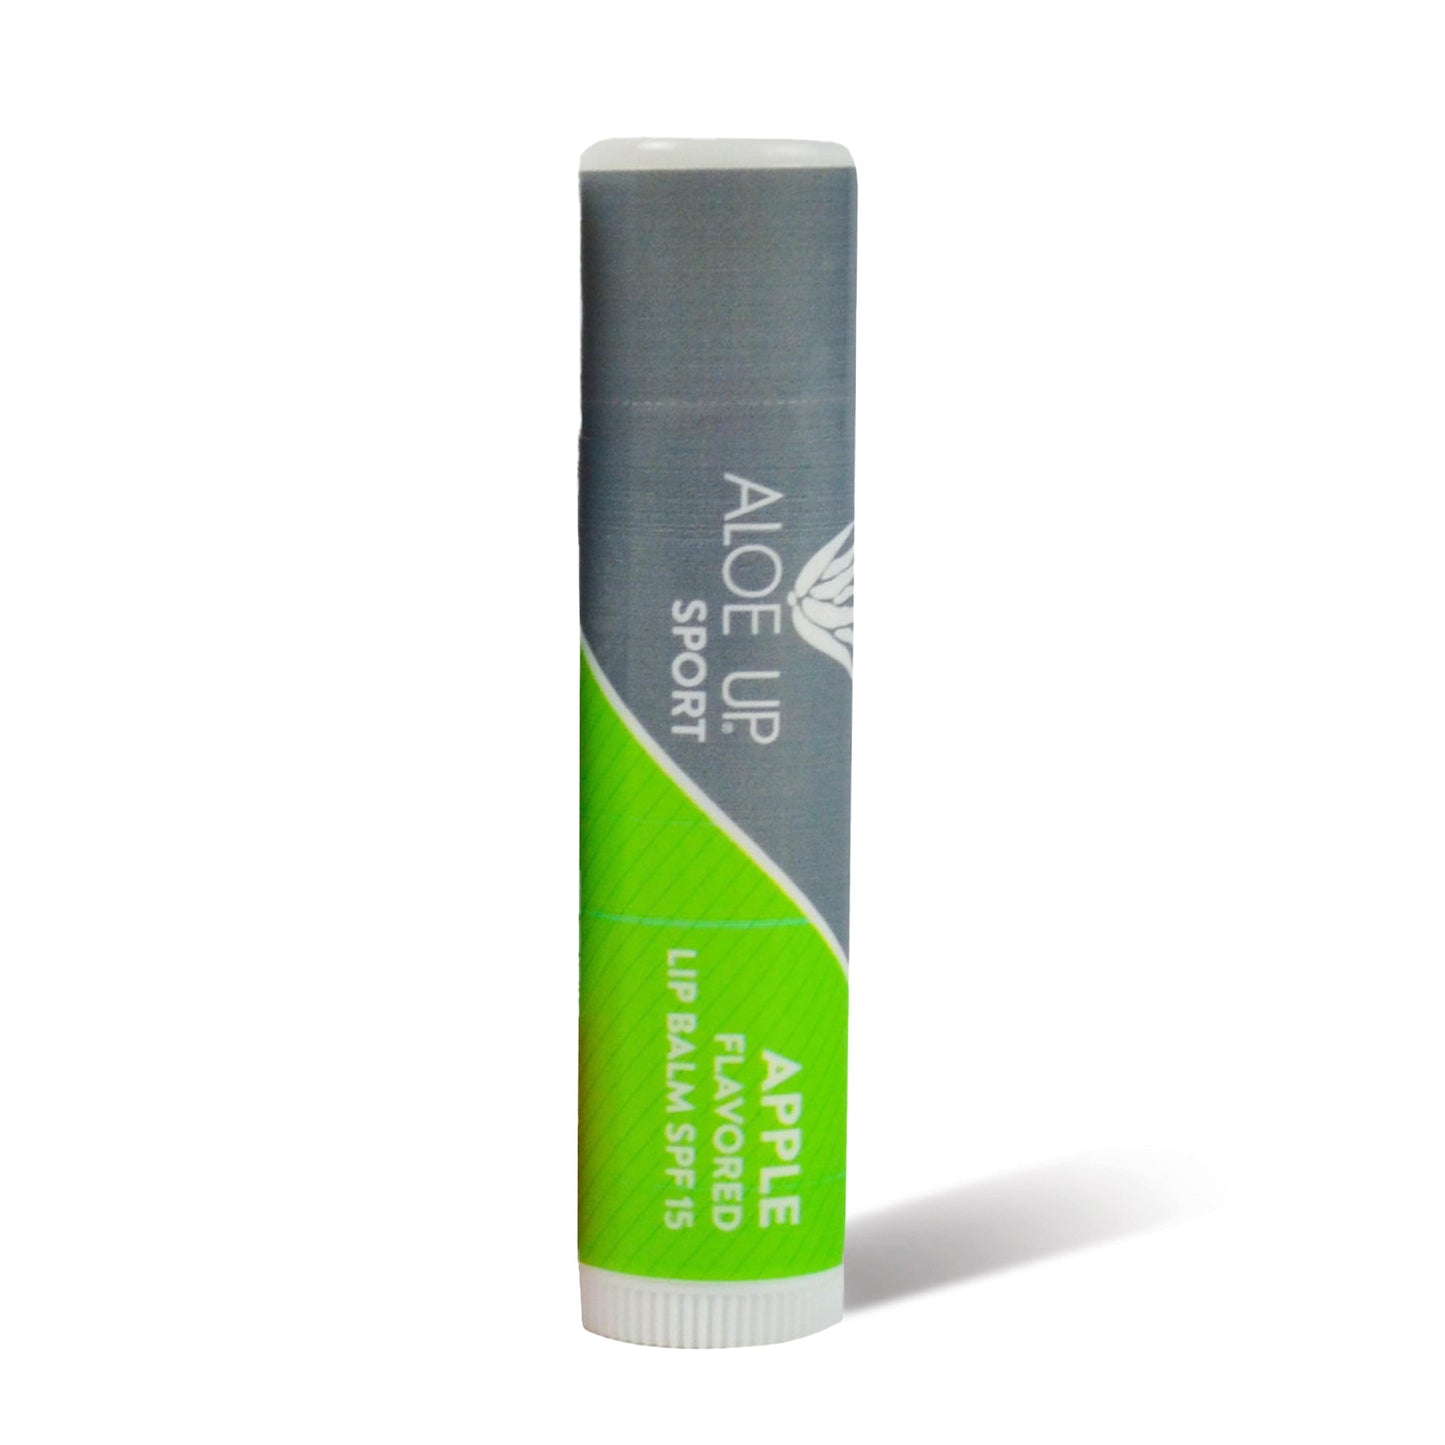 Aloe Vera Sports Lip Balm - Apple SPF15 4.25g